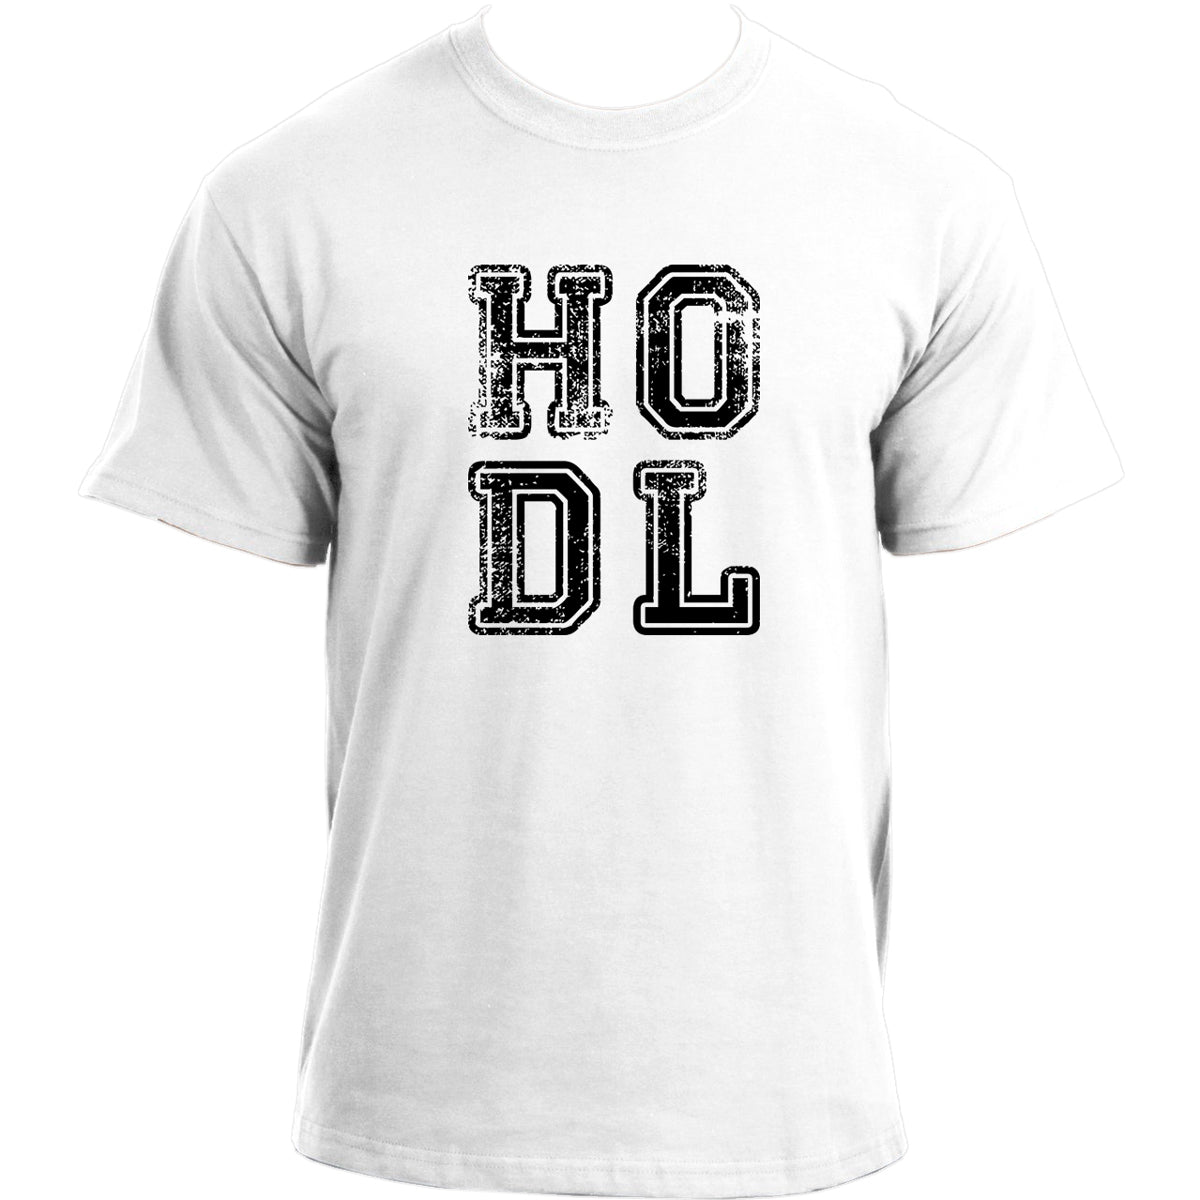 HODL Crypto T-Shirt I Crypto Currency T Shirt I Cryptocurrency Trader Blockchain Investor Tshirt